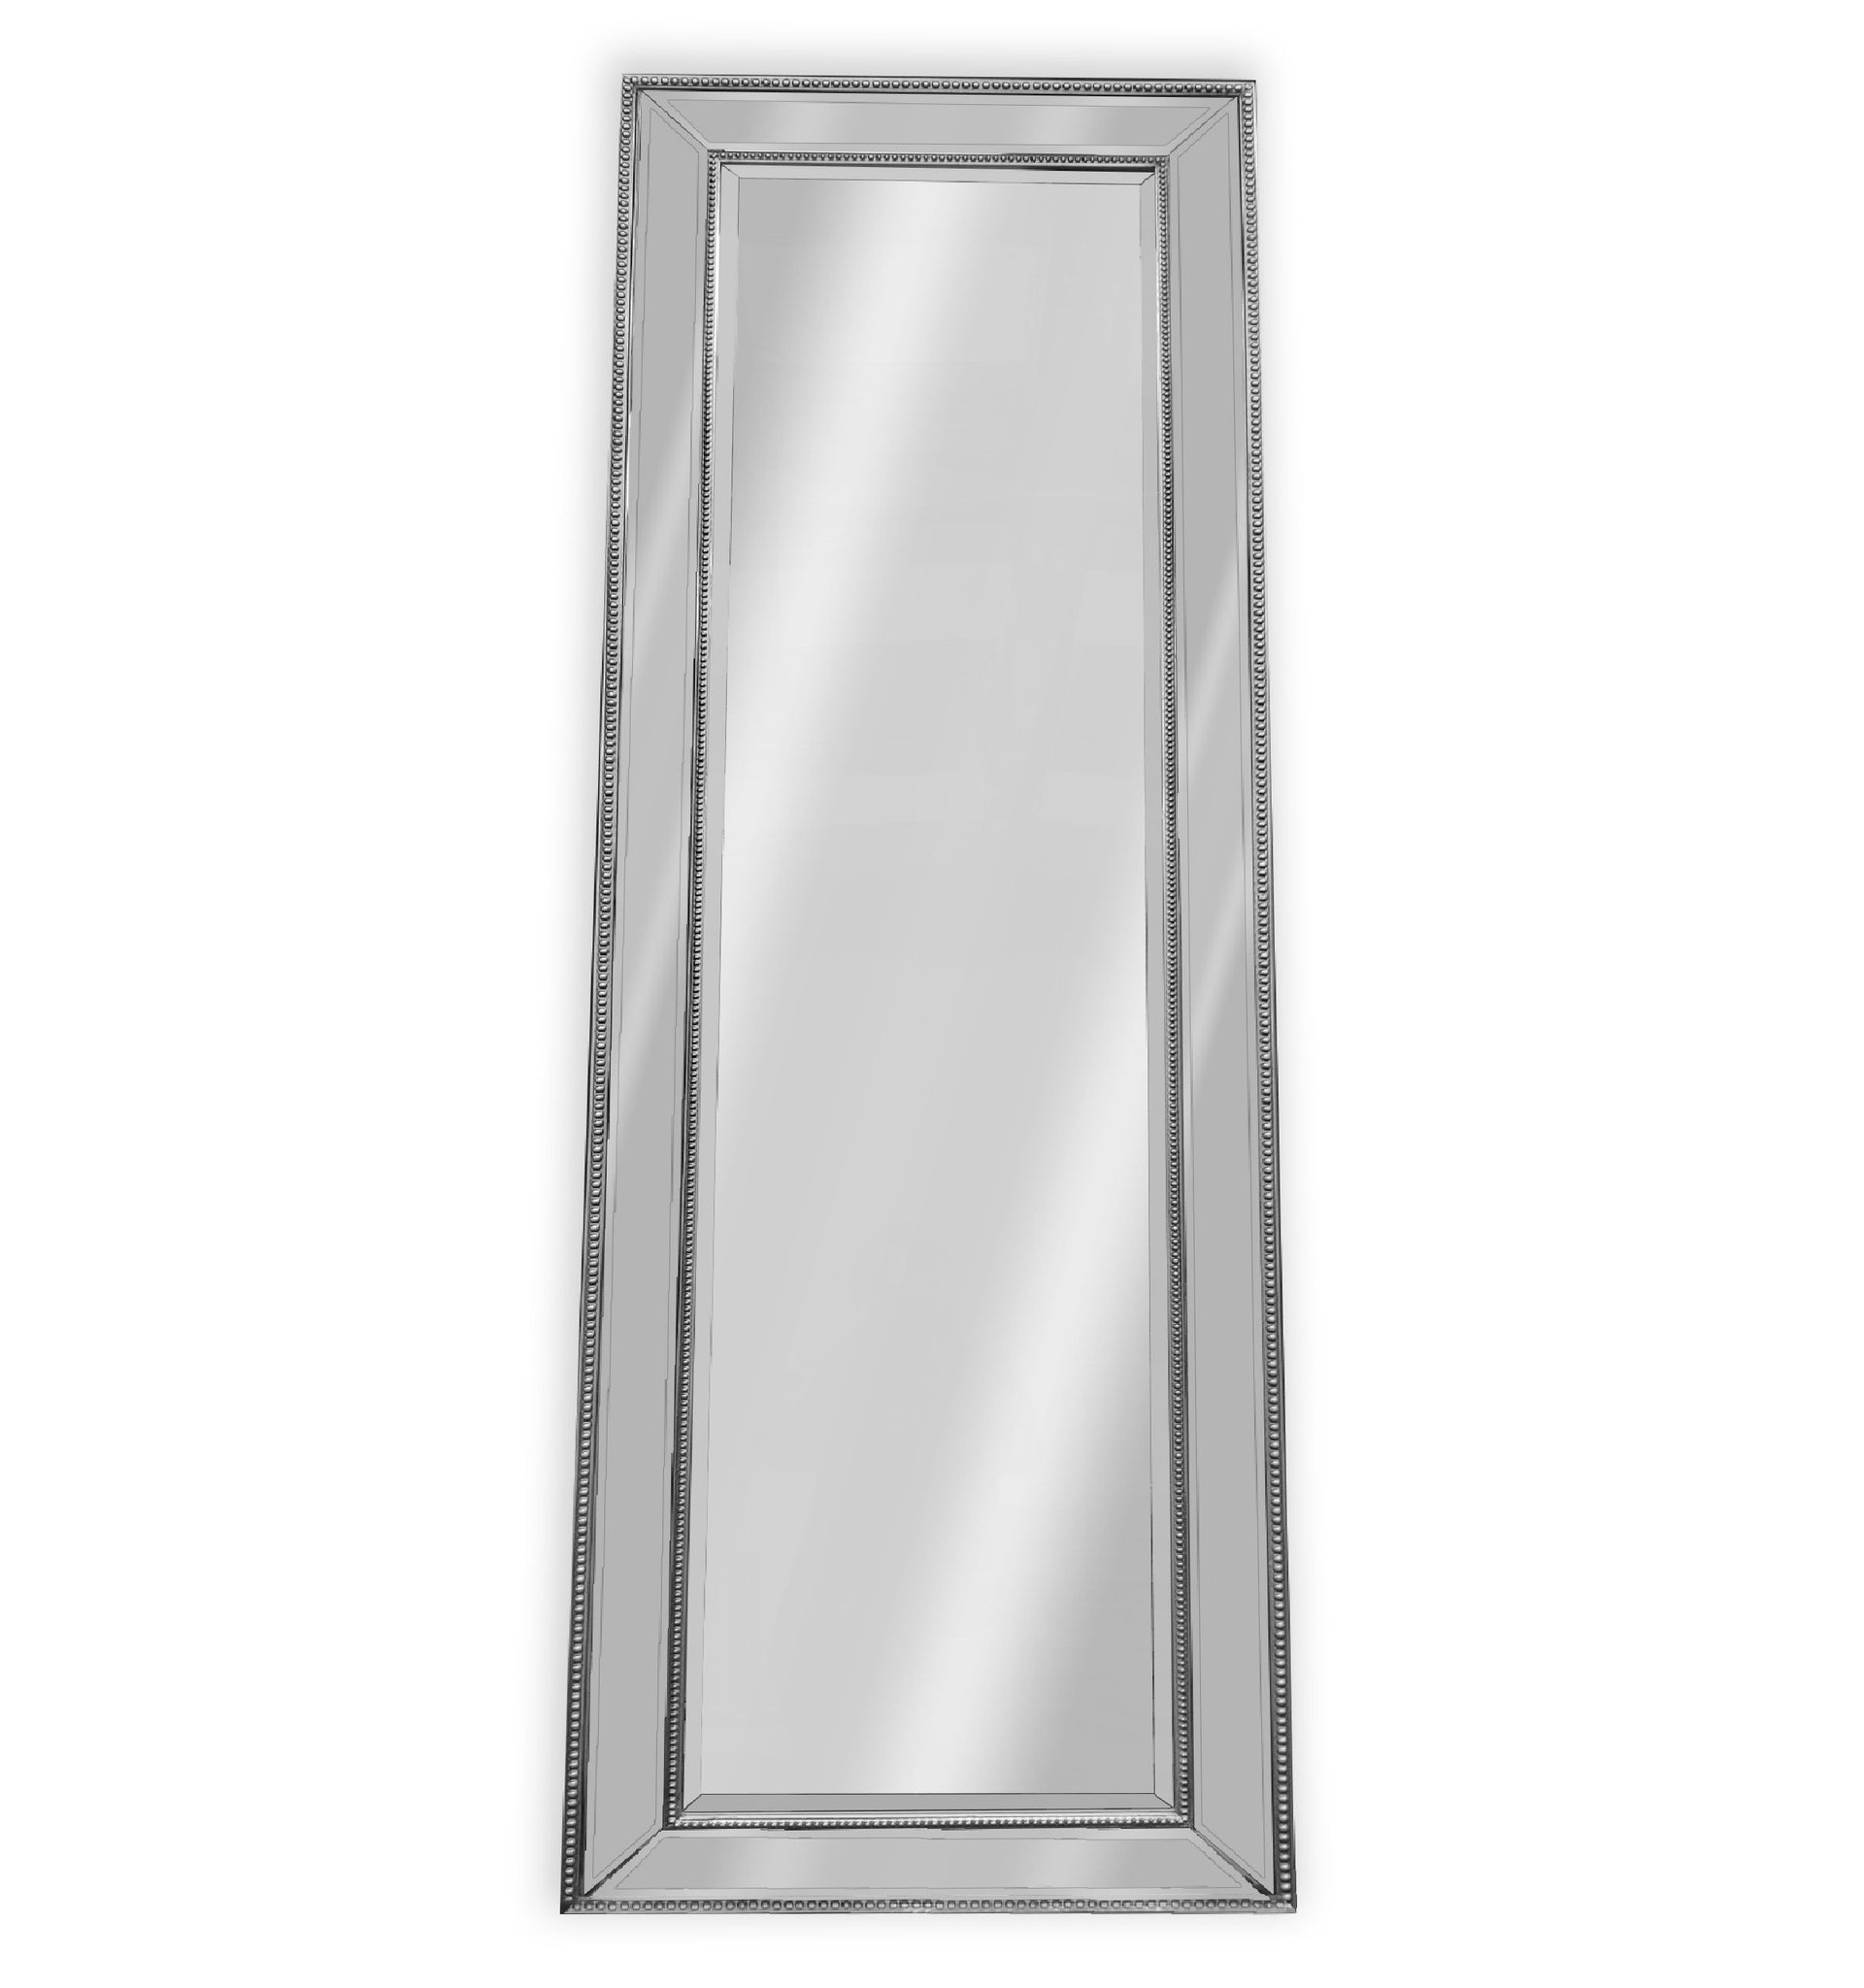 Medium Silver Beaded Framed Mirror - 70cm x 170cm - image1